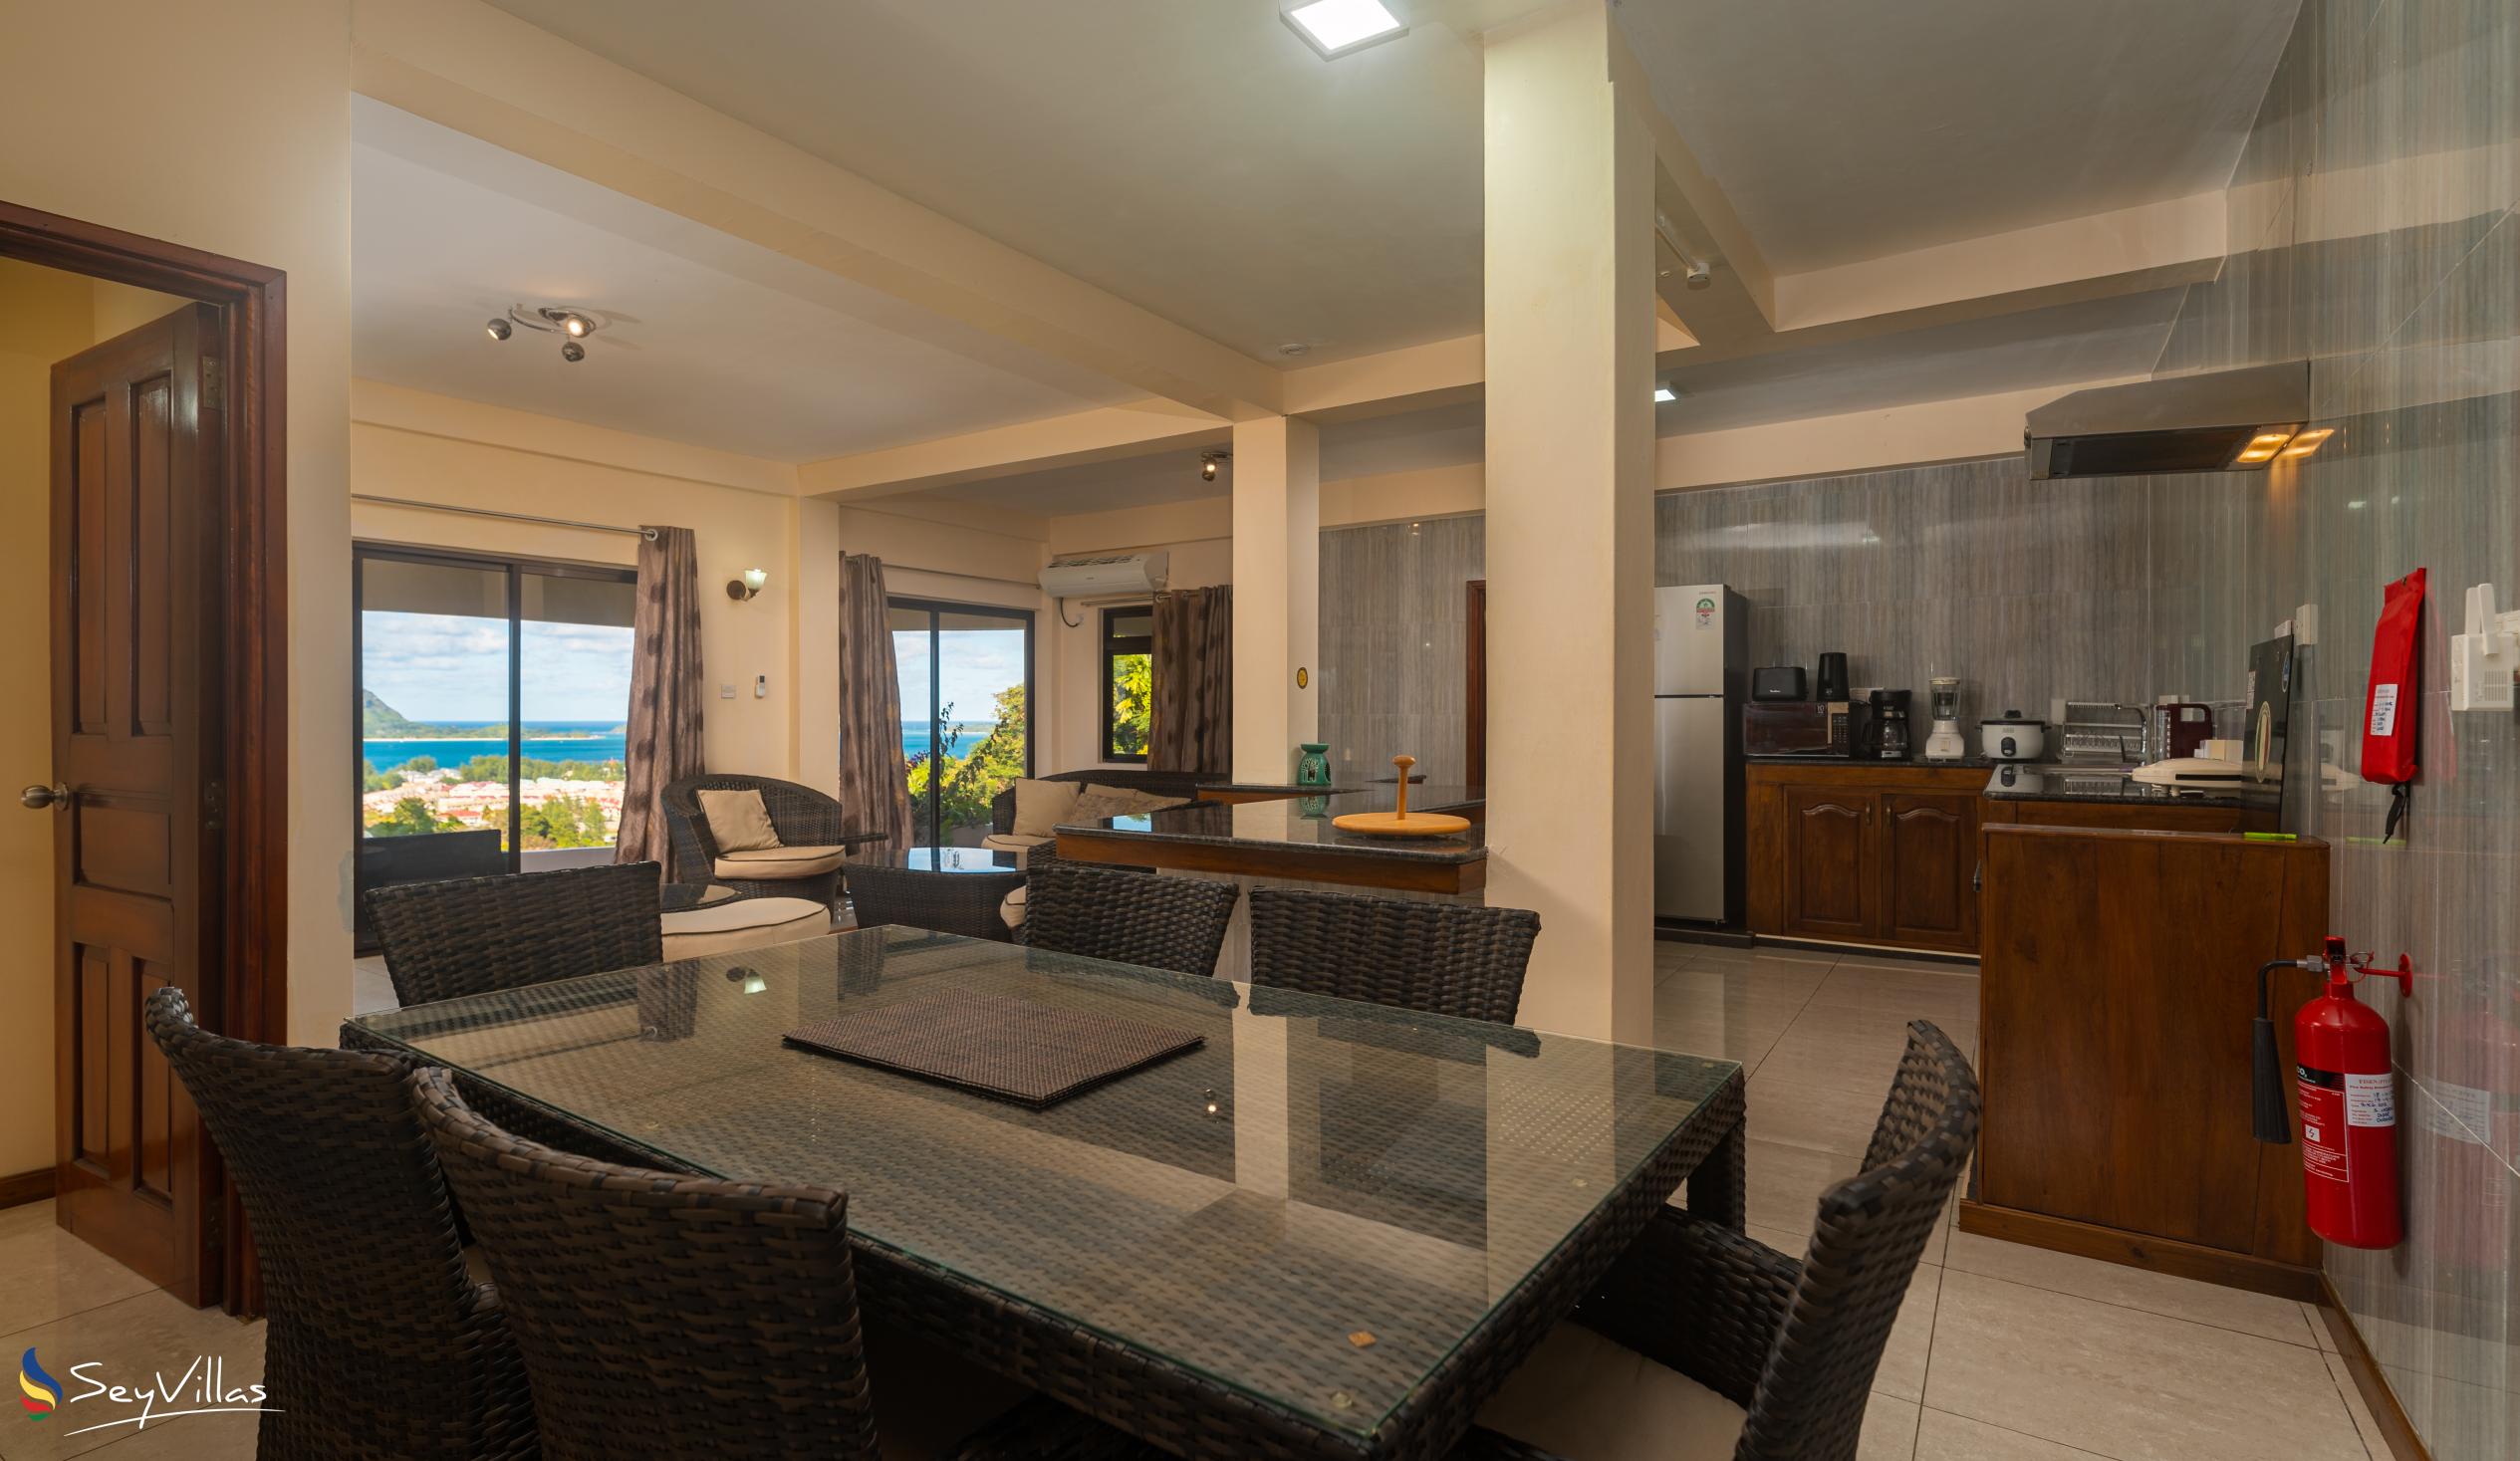 Photo 66: Maison L'Horizon - 2-Bedroom Apartment Vann Nor - Mahé (Seychelles)